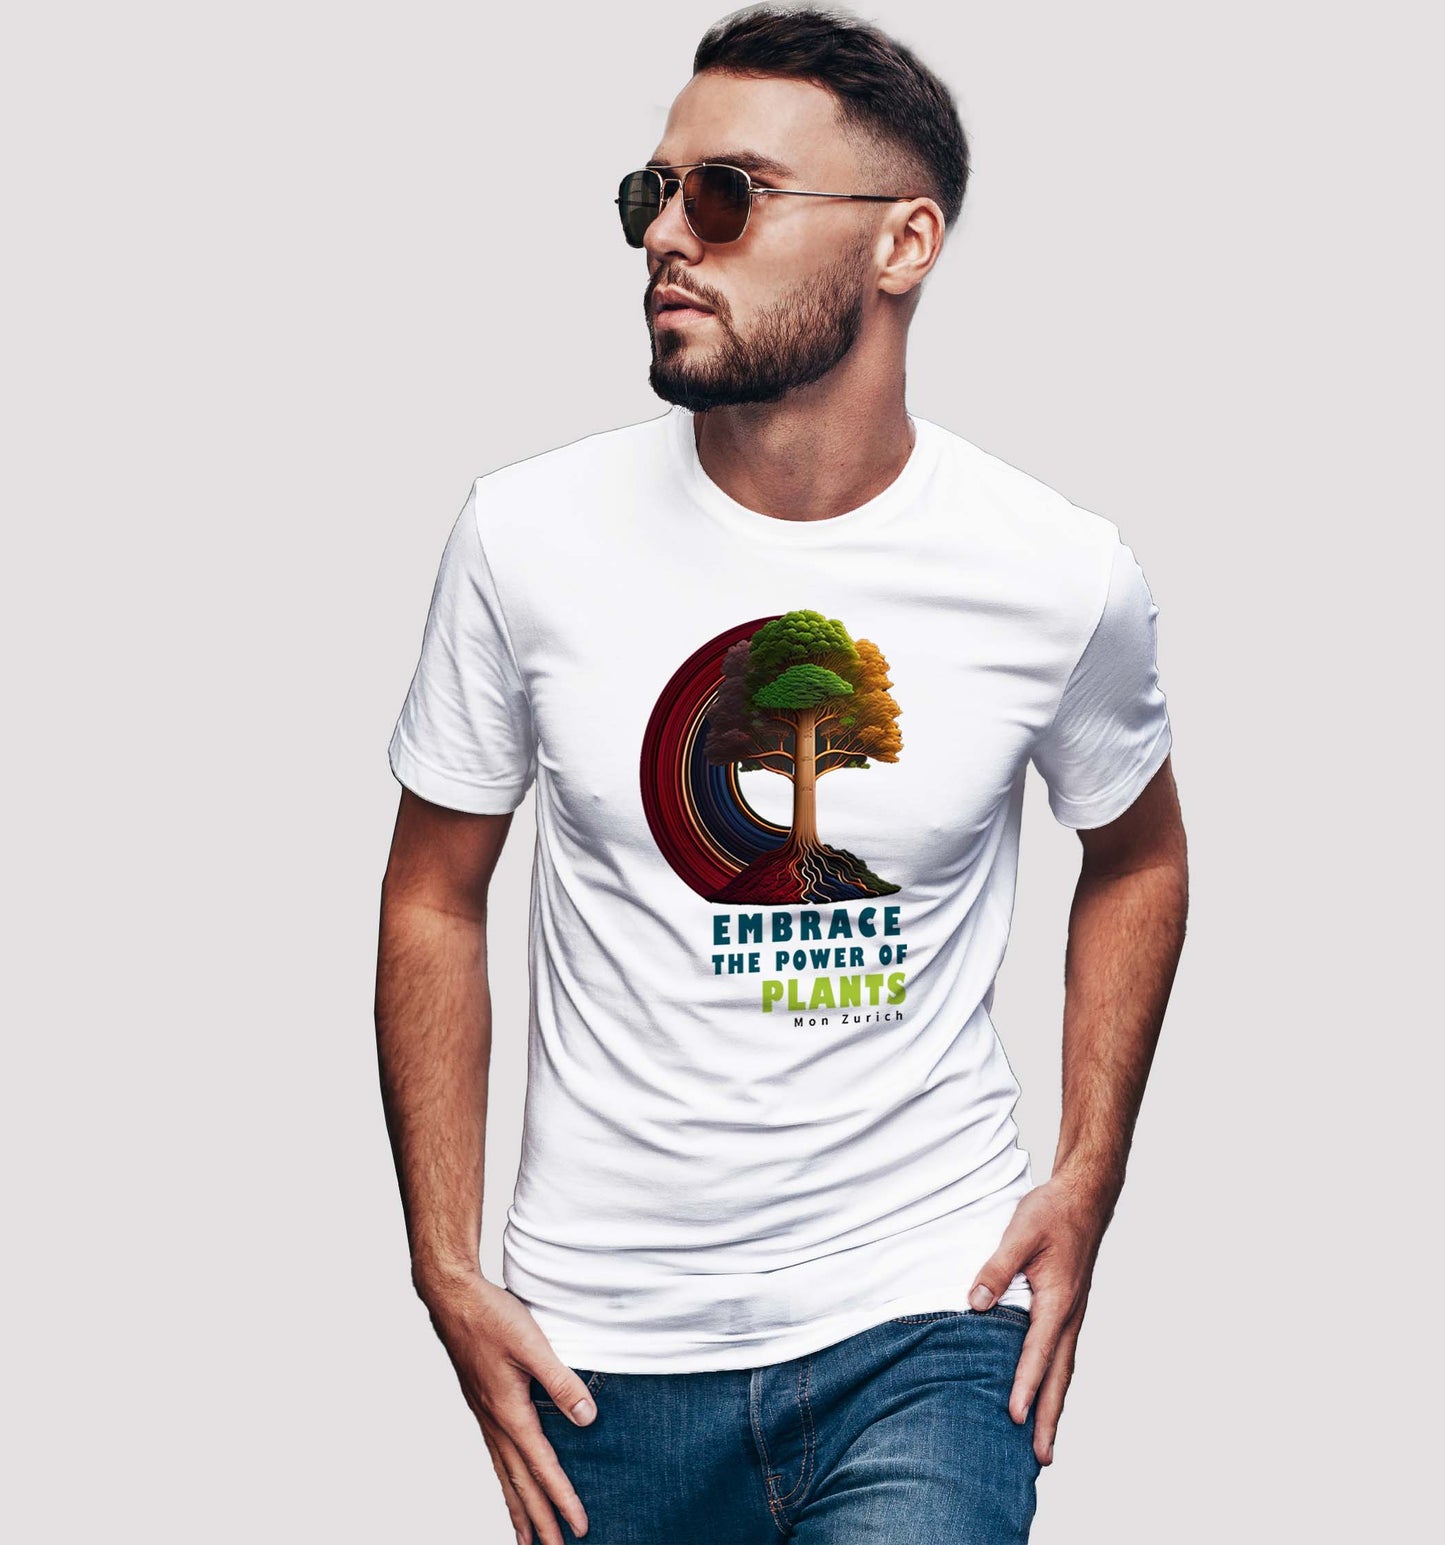 Embrace the Power of Plants T-shirt in Light - Mon Zurich Originals